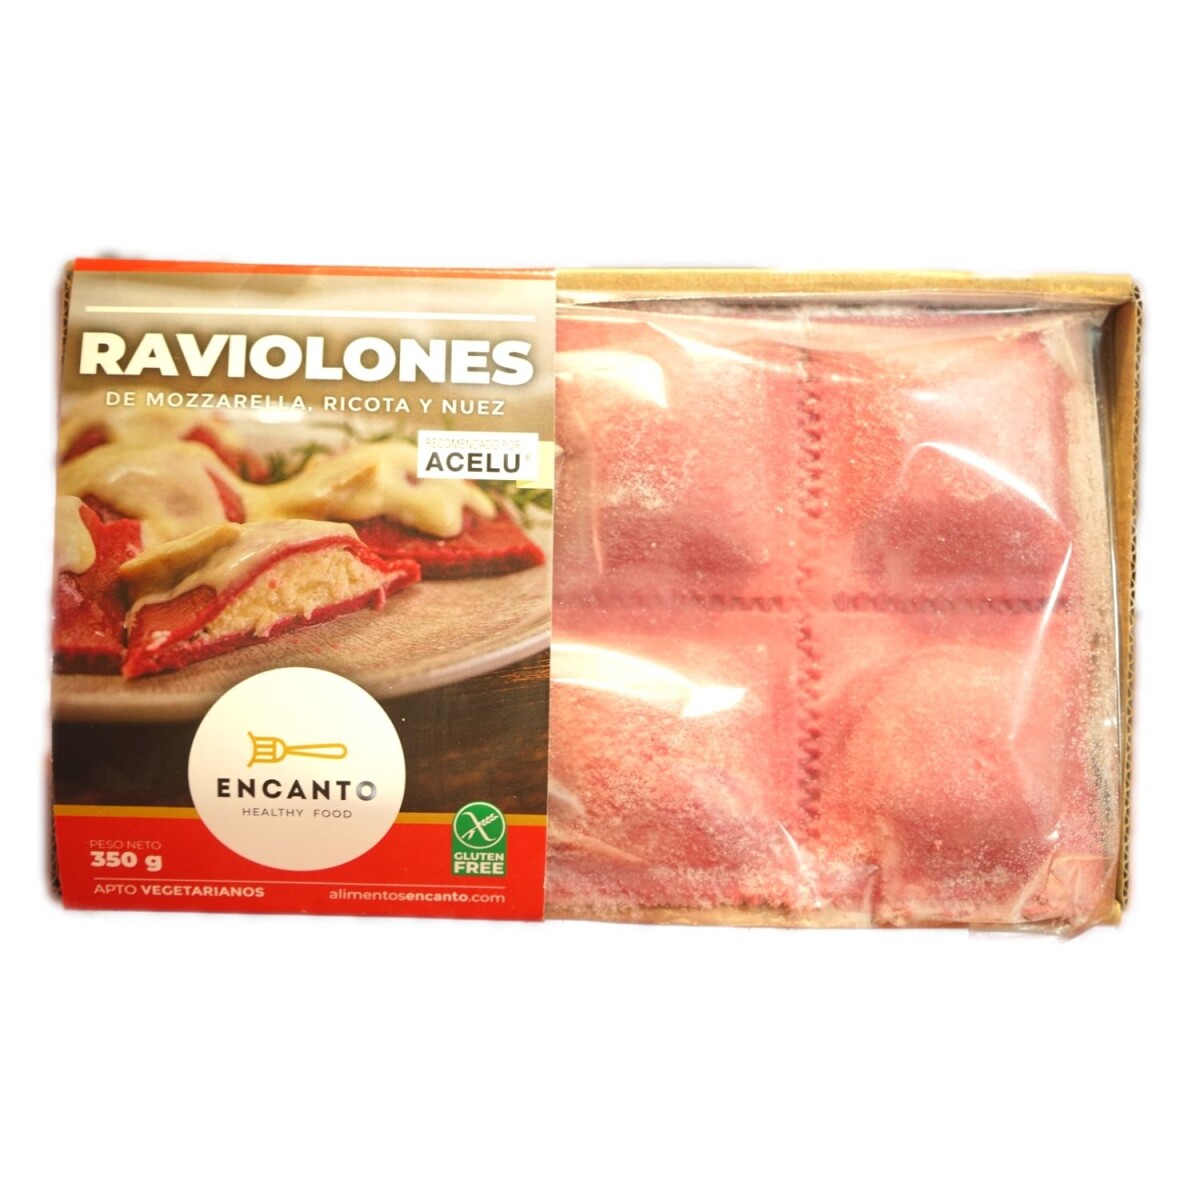 Raviolones masa remolacha muzza/ricotta/nuez Encanto - 350gr 